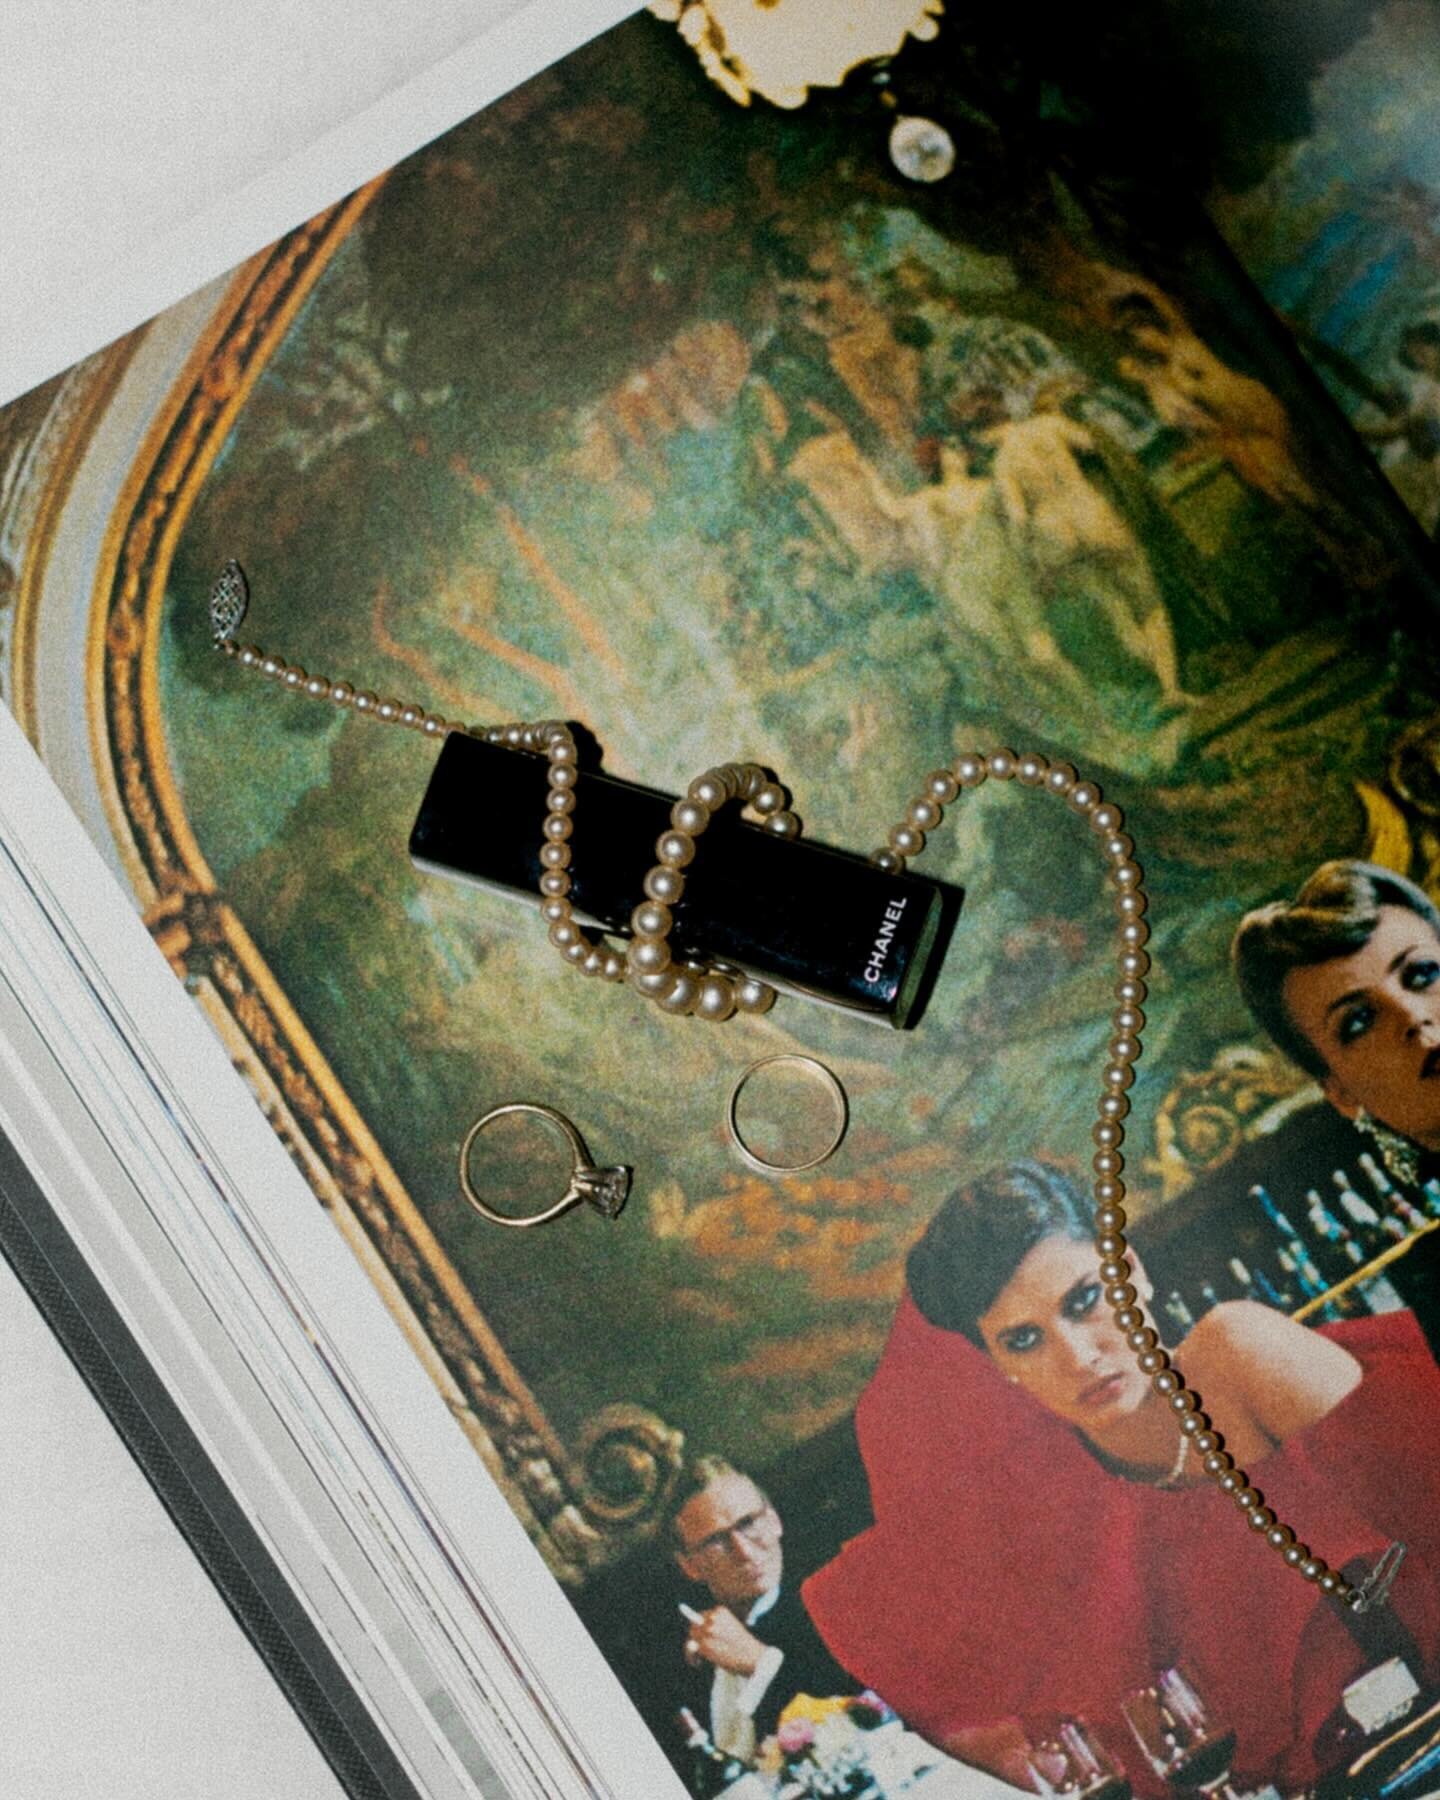 Chanel &amp; pearls

#weddingdetails #weddingshoes #dmvweddingphotographer #vogueweddings